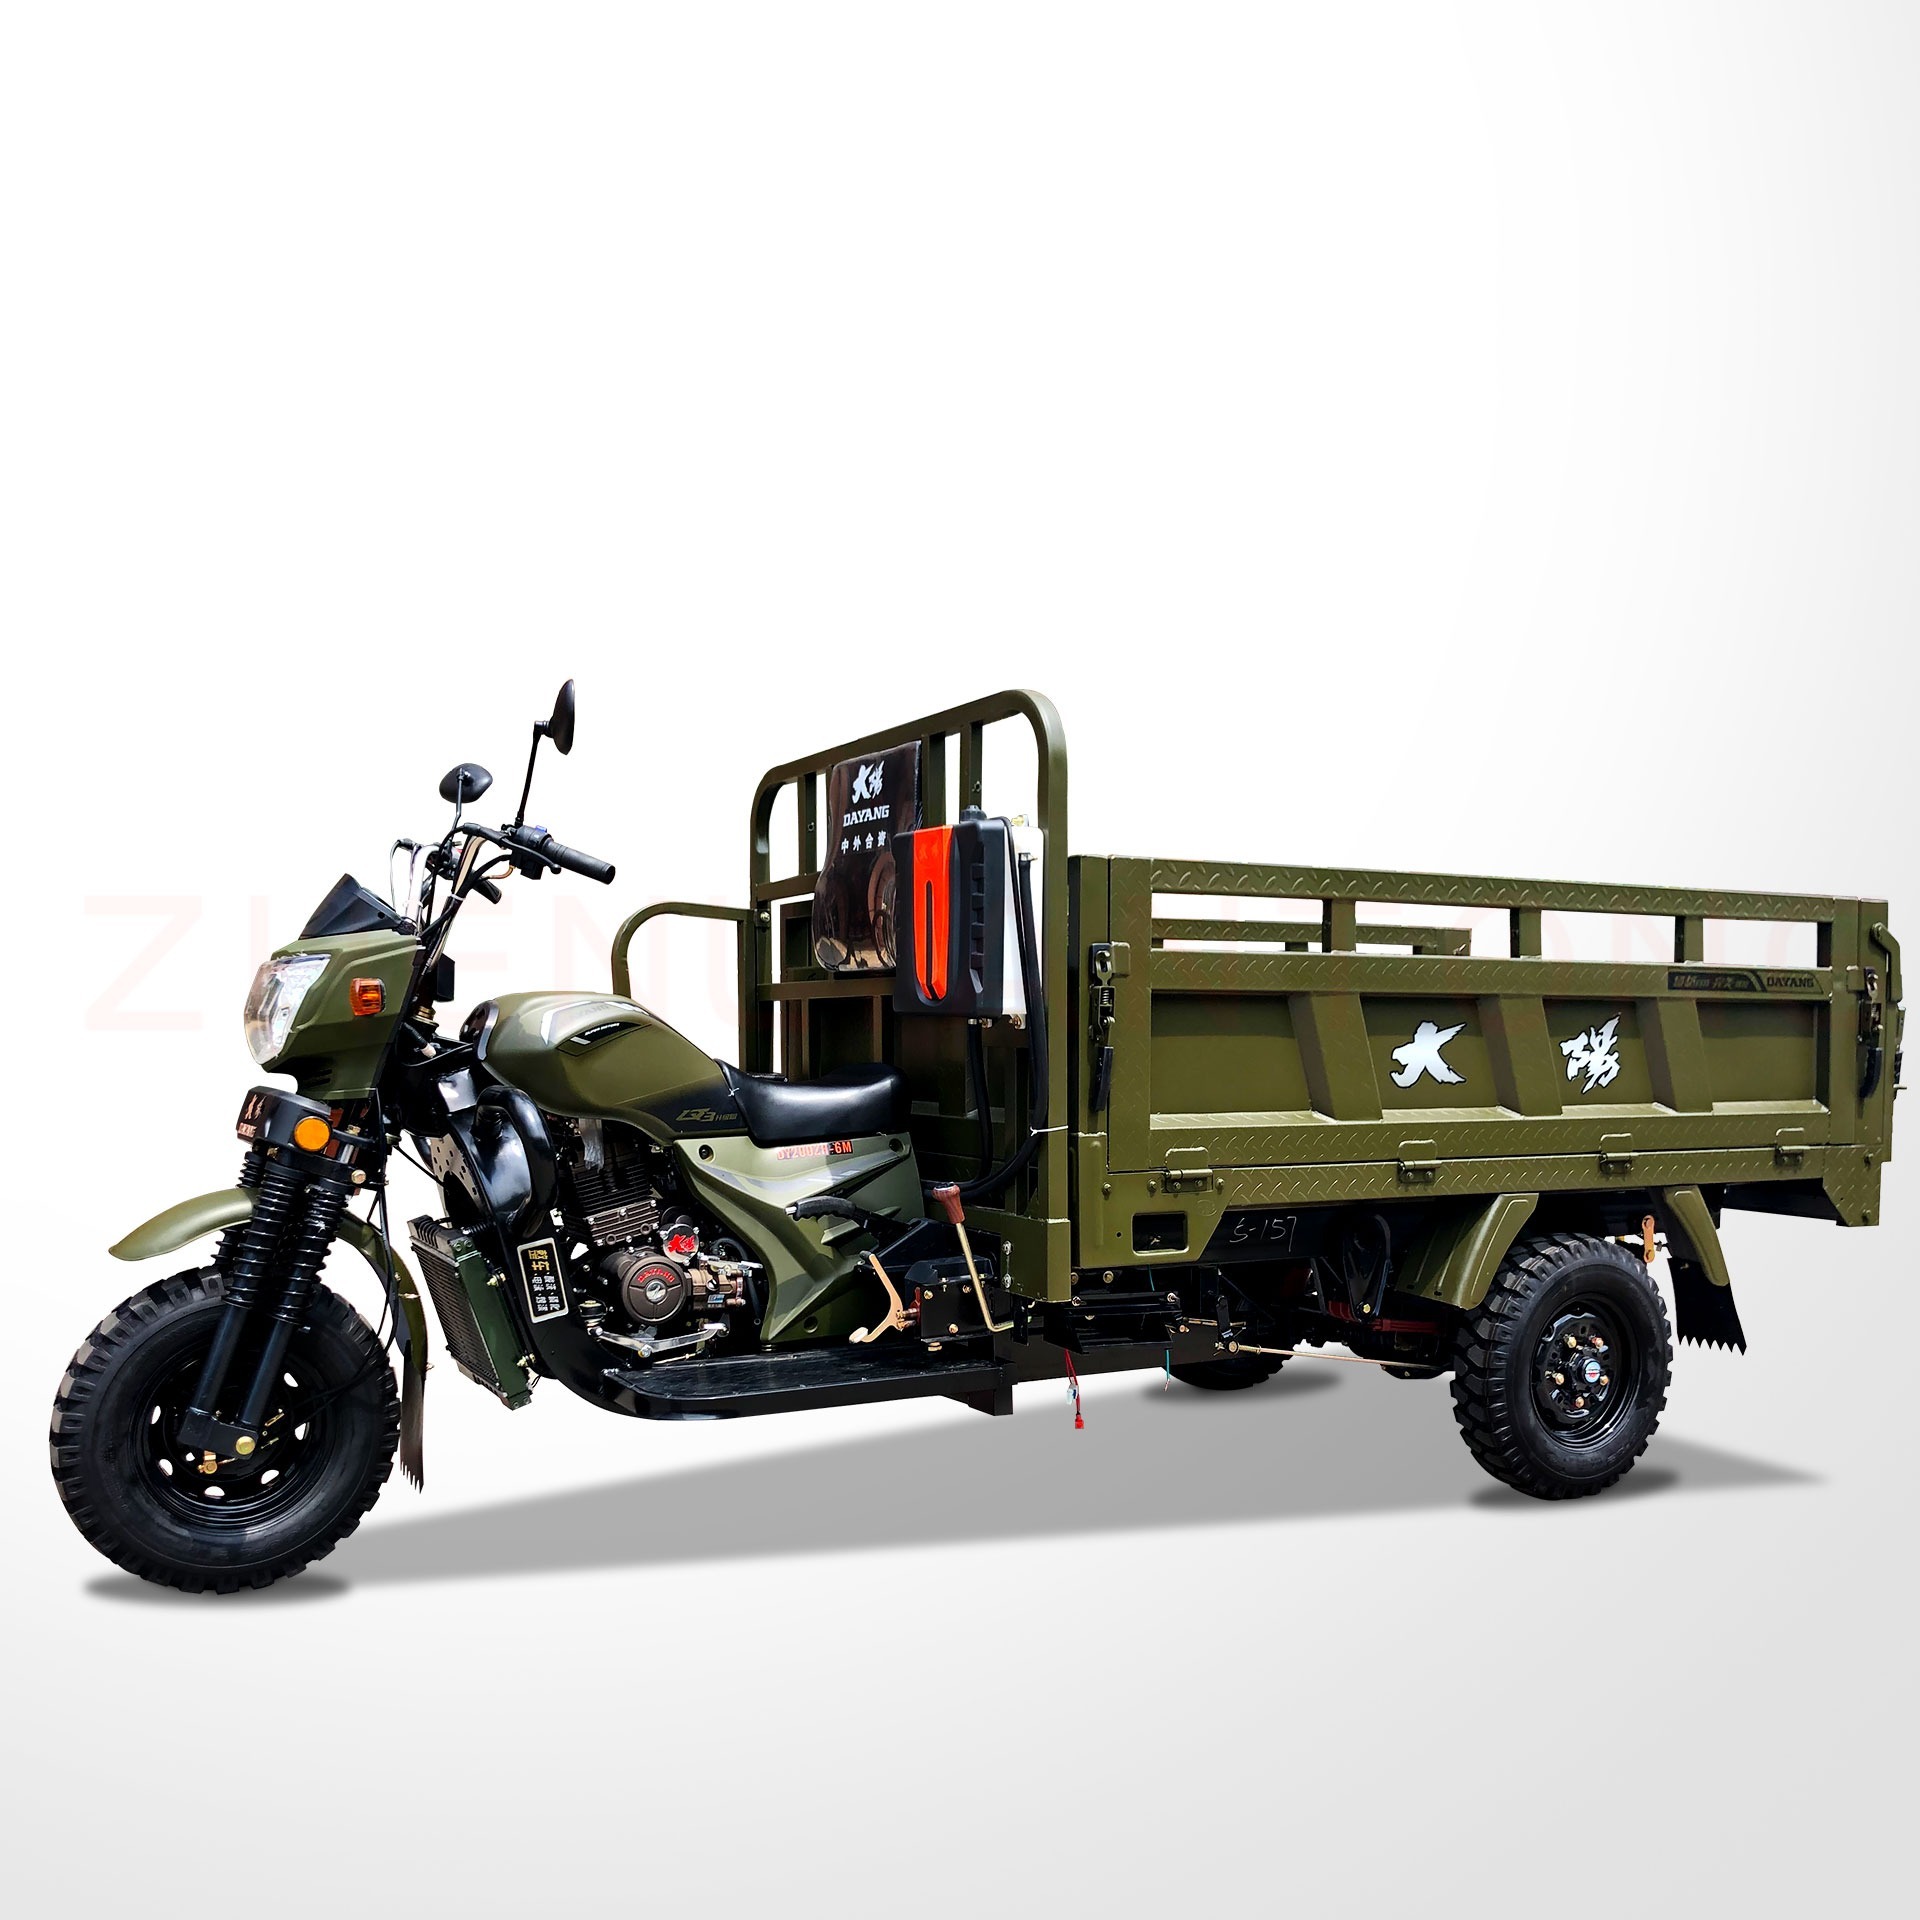 4 Stroke Three Wheel Cargo Motorcycle